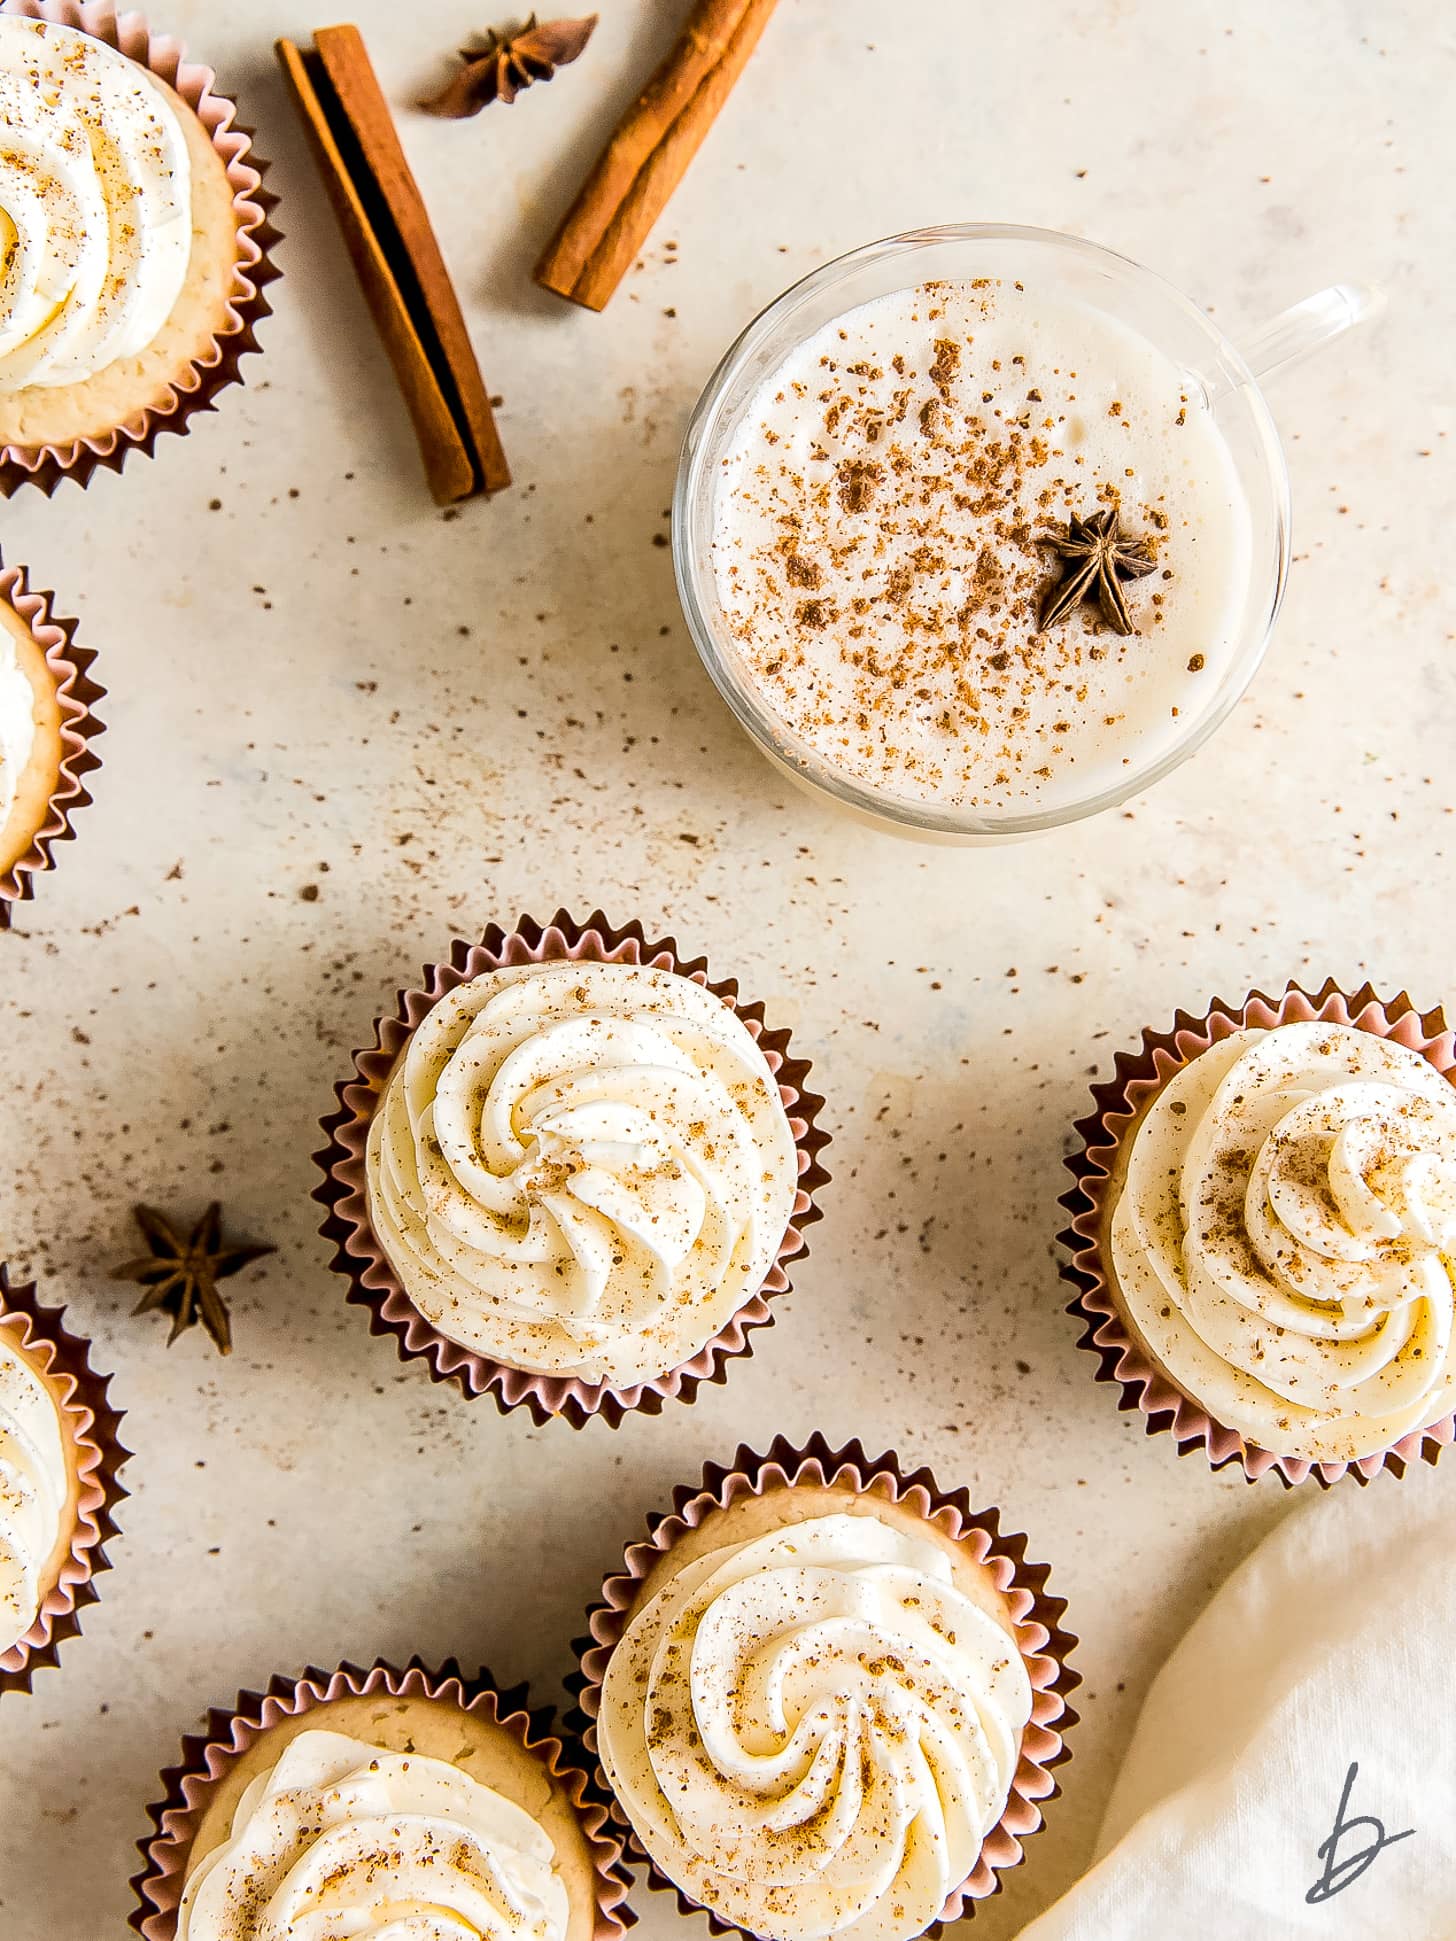 eggnog cupcakes on beige tabletop with cinnamon sticks and mug of eggnog next to cupcakes.